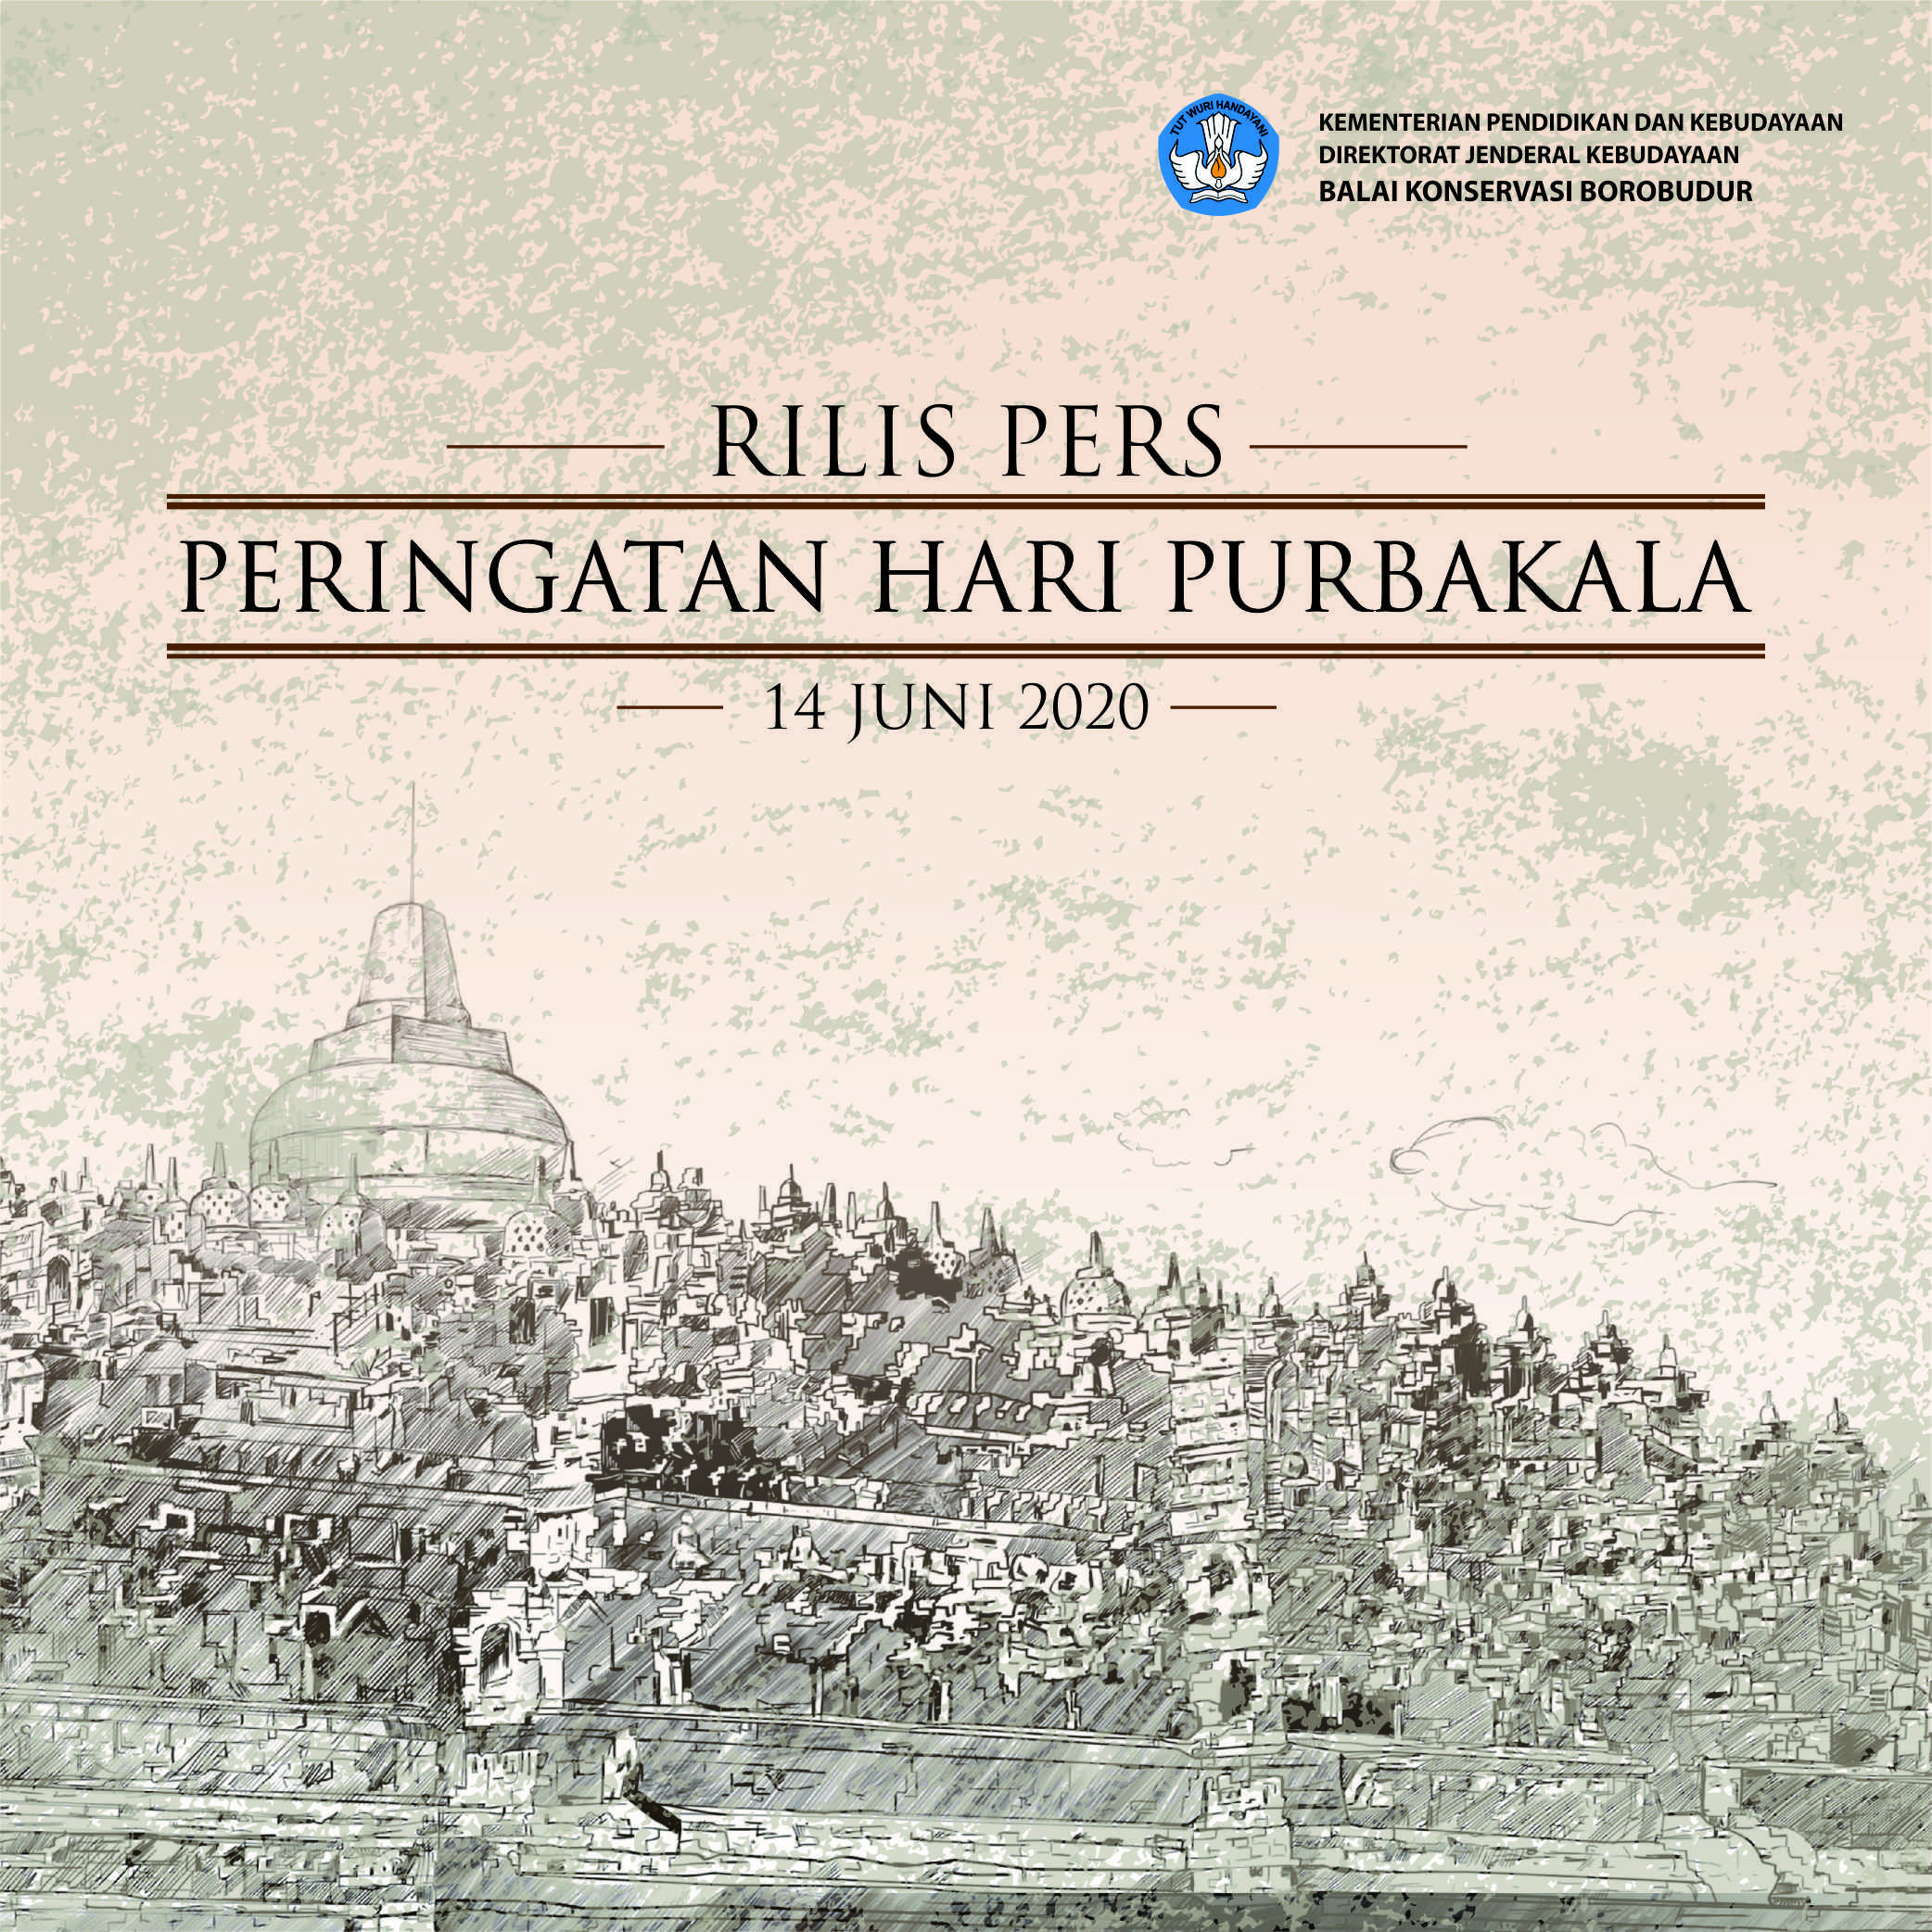 You are currently viewing RILIS PERS PERINGATAN HARI PURBAKALA